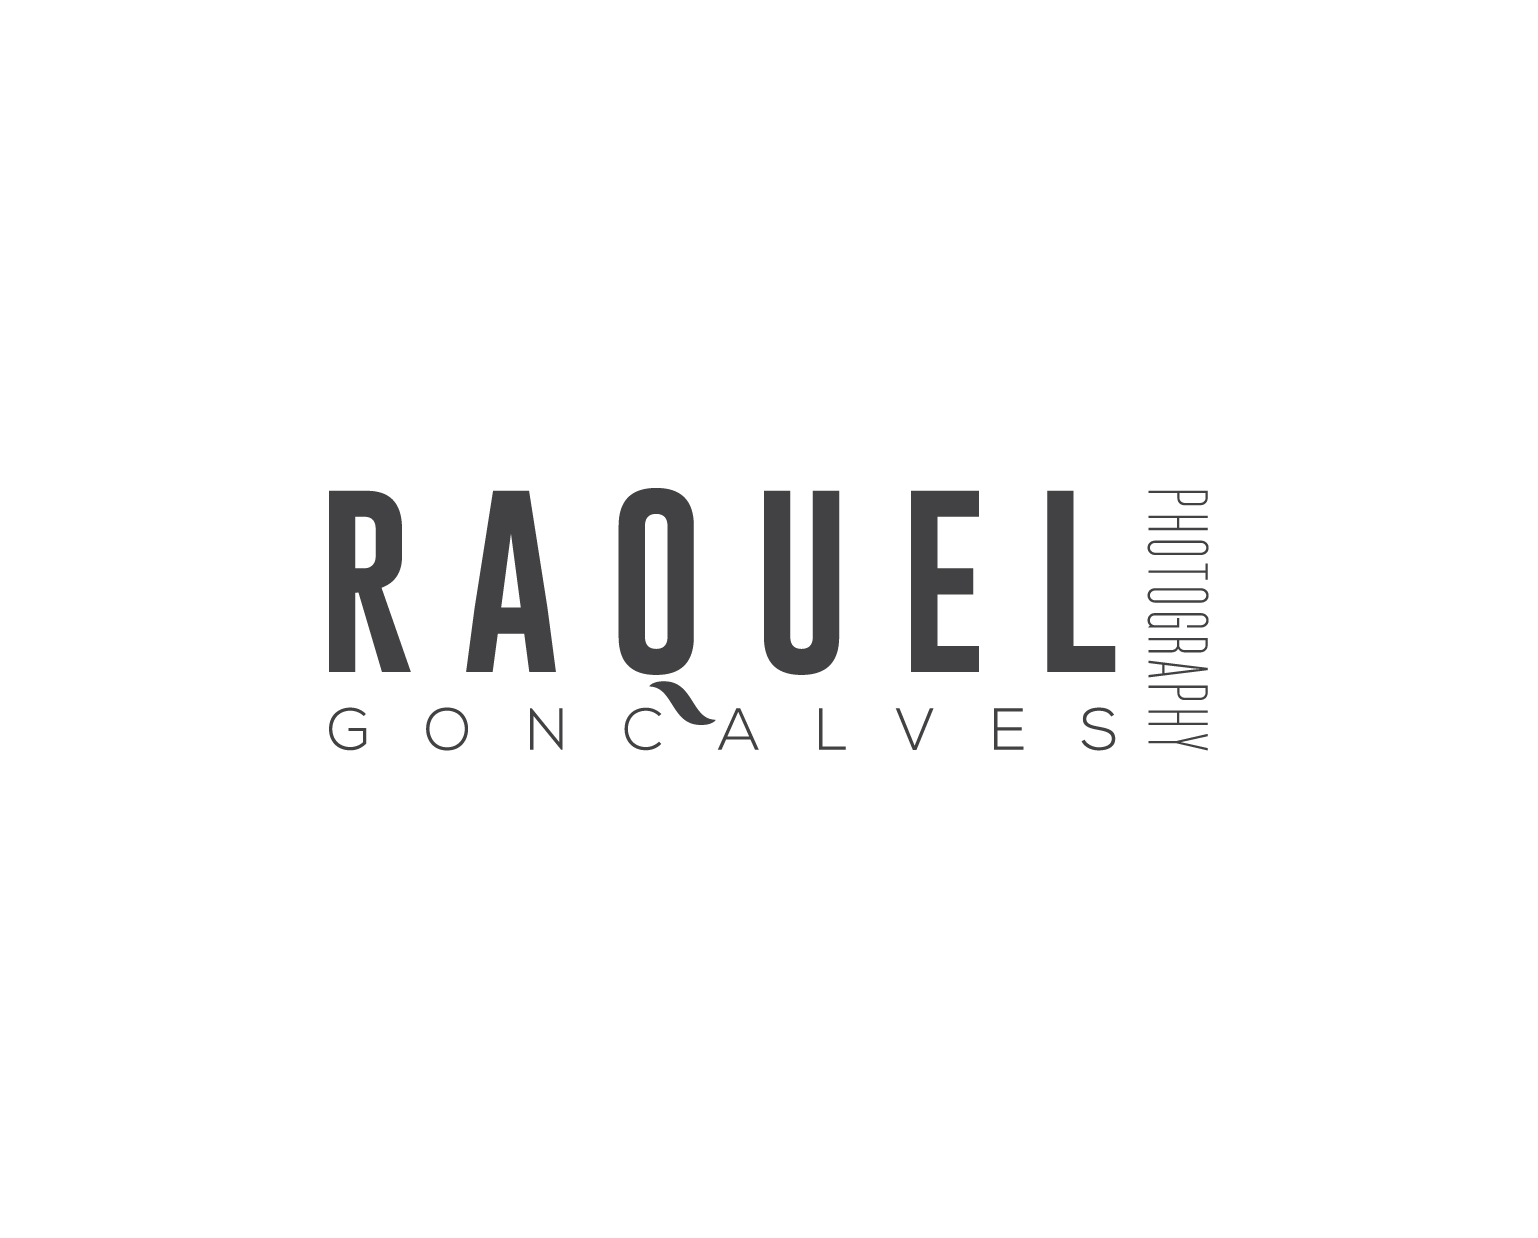 Raquel Goncalves Photography - Brand strategy and logo design